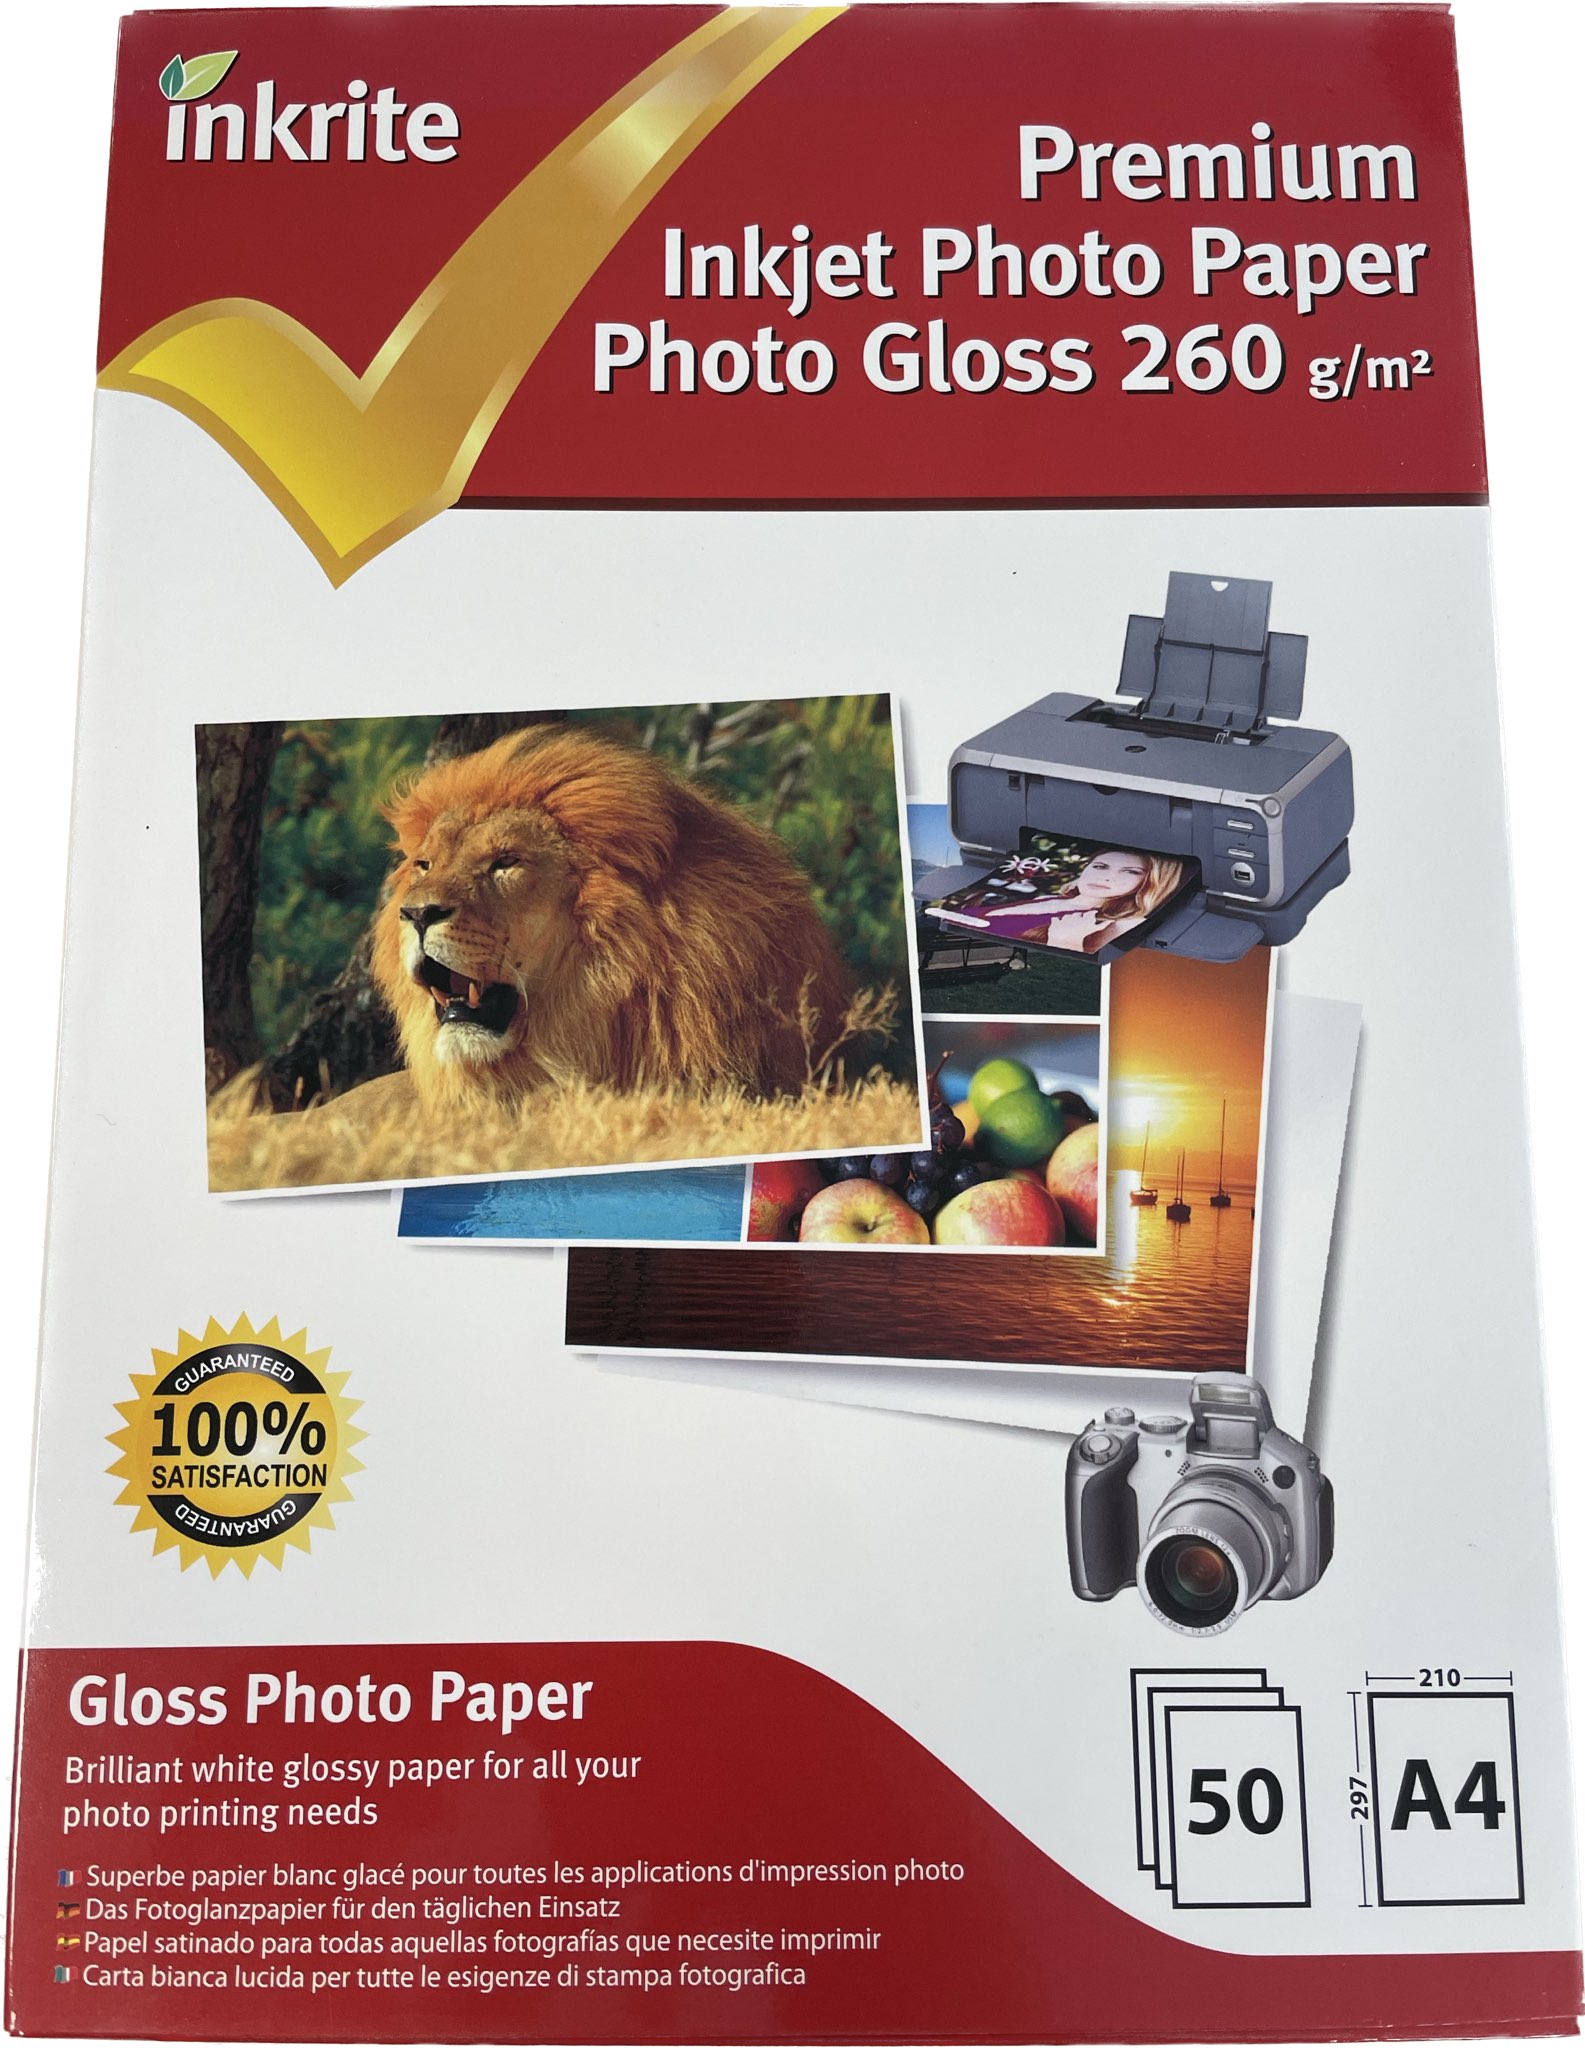 Inkrite Premium Quality Inkjet Photo Paper A4 Photo Gloss 260gsm 50 Sheets